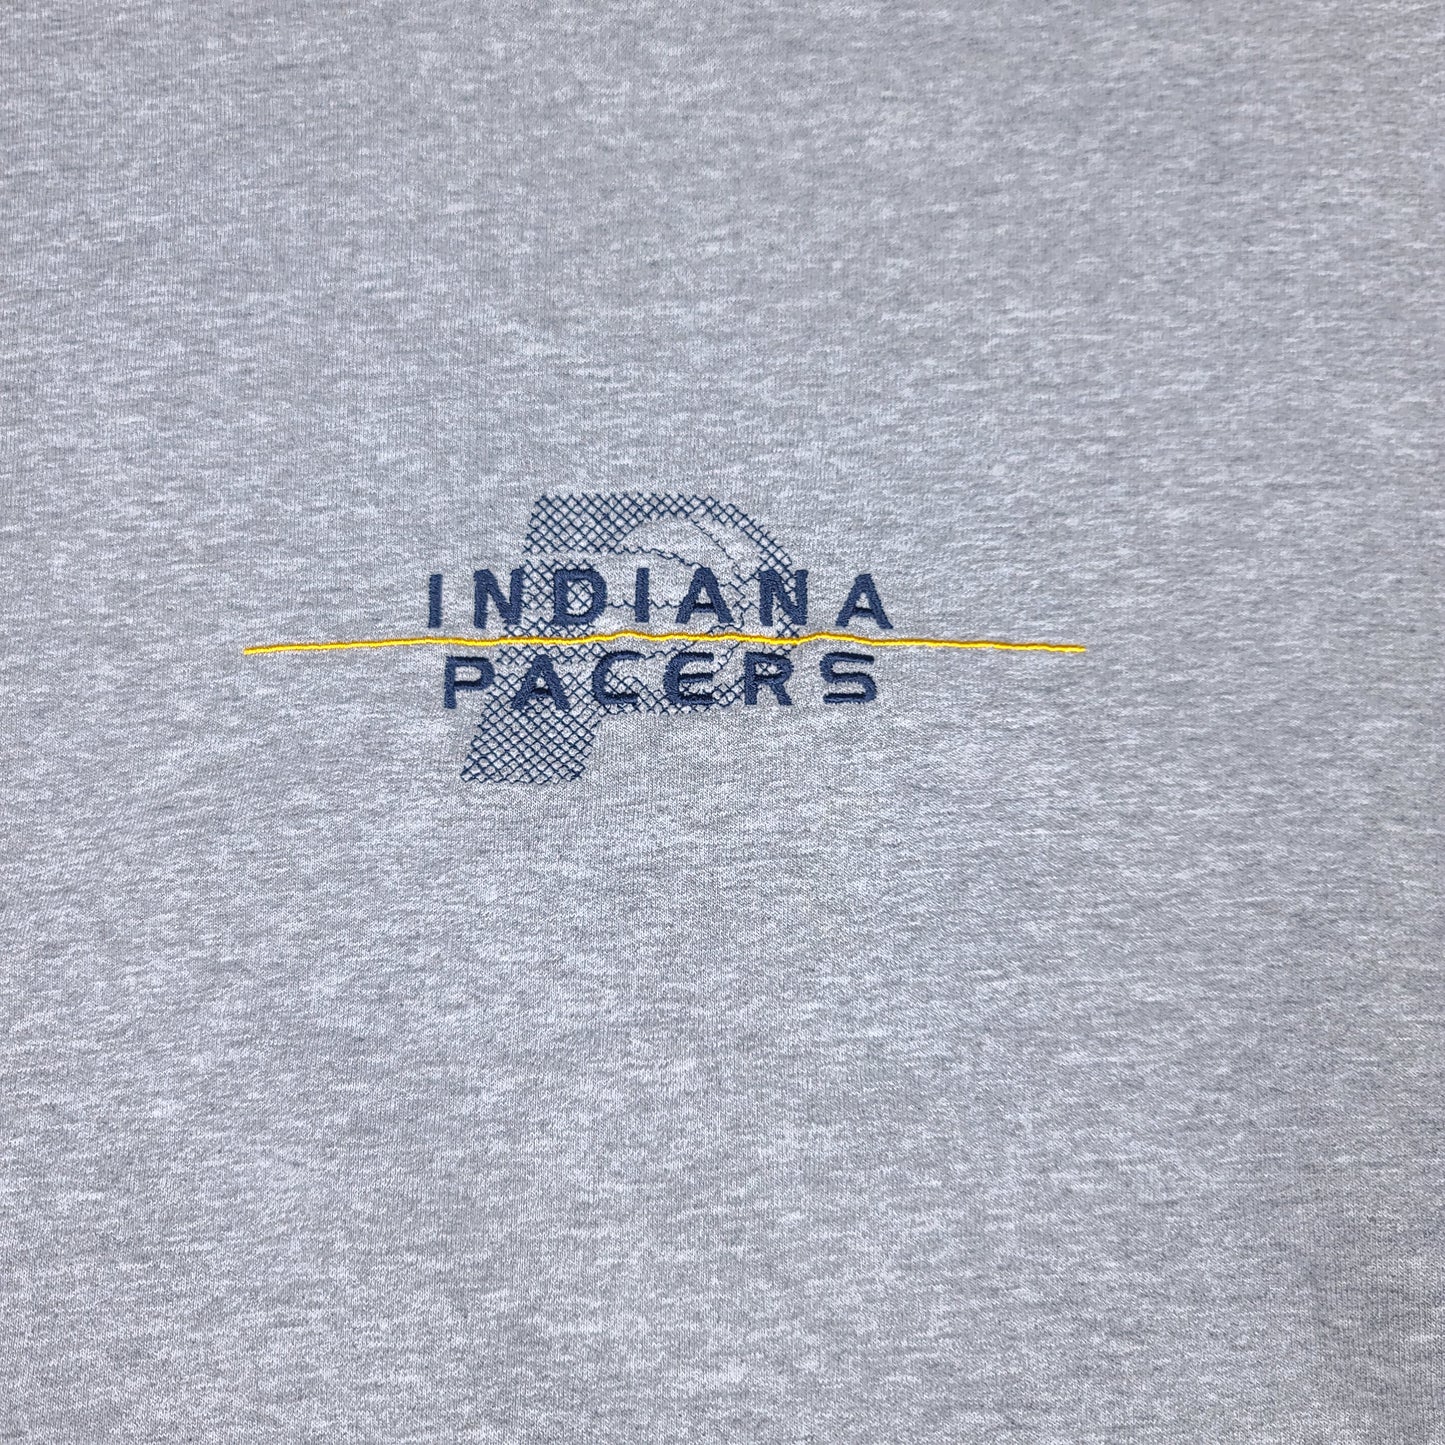 Vintage Indiana Pacers NBA Champion Gray Sweatsshirt